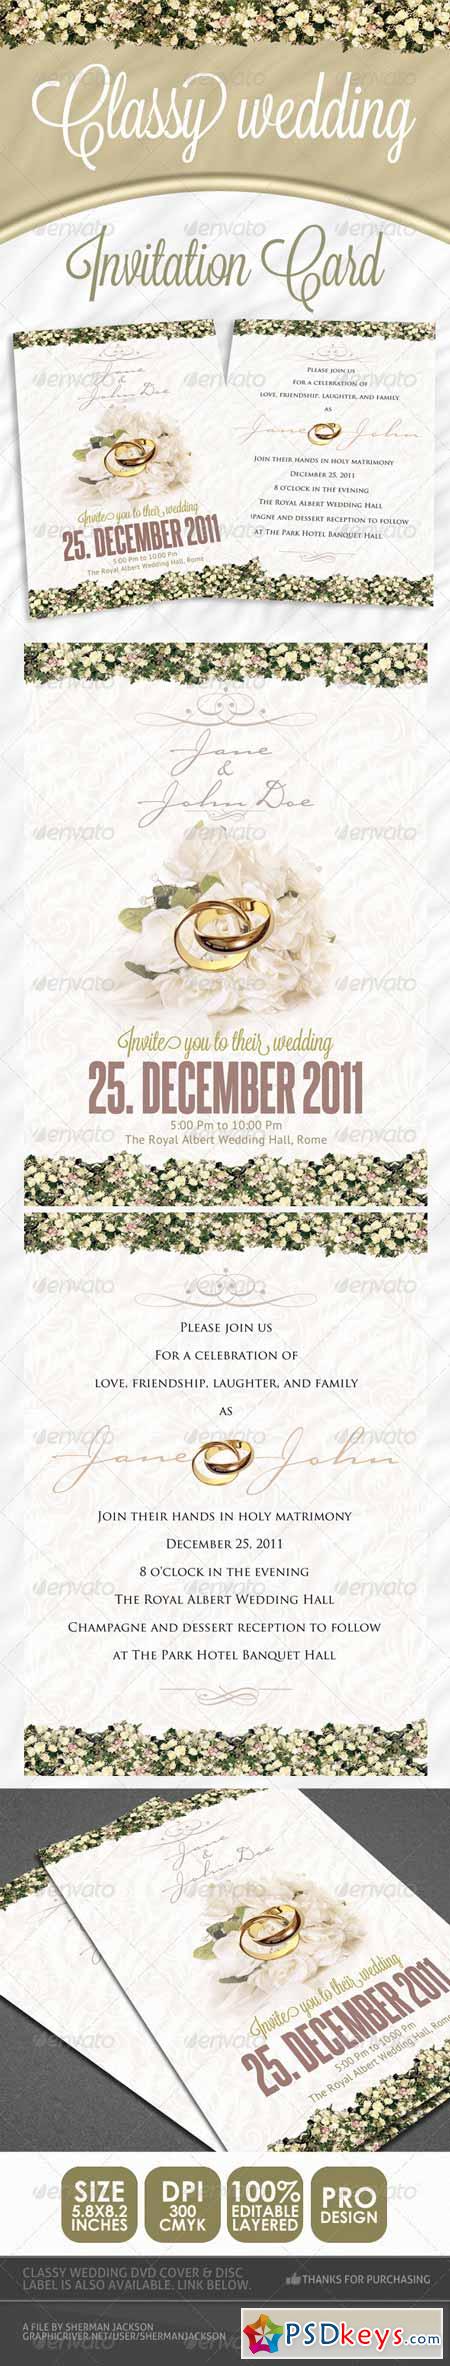 Classy Wedding Invitations 1130154 » Free Download Photoshop Vector Stock image Via Torrent